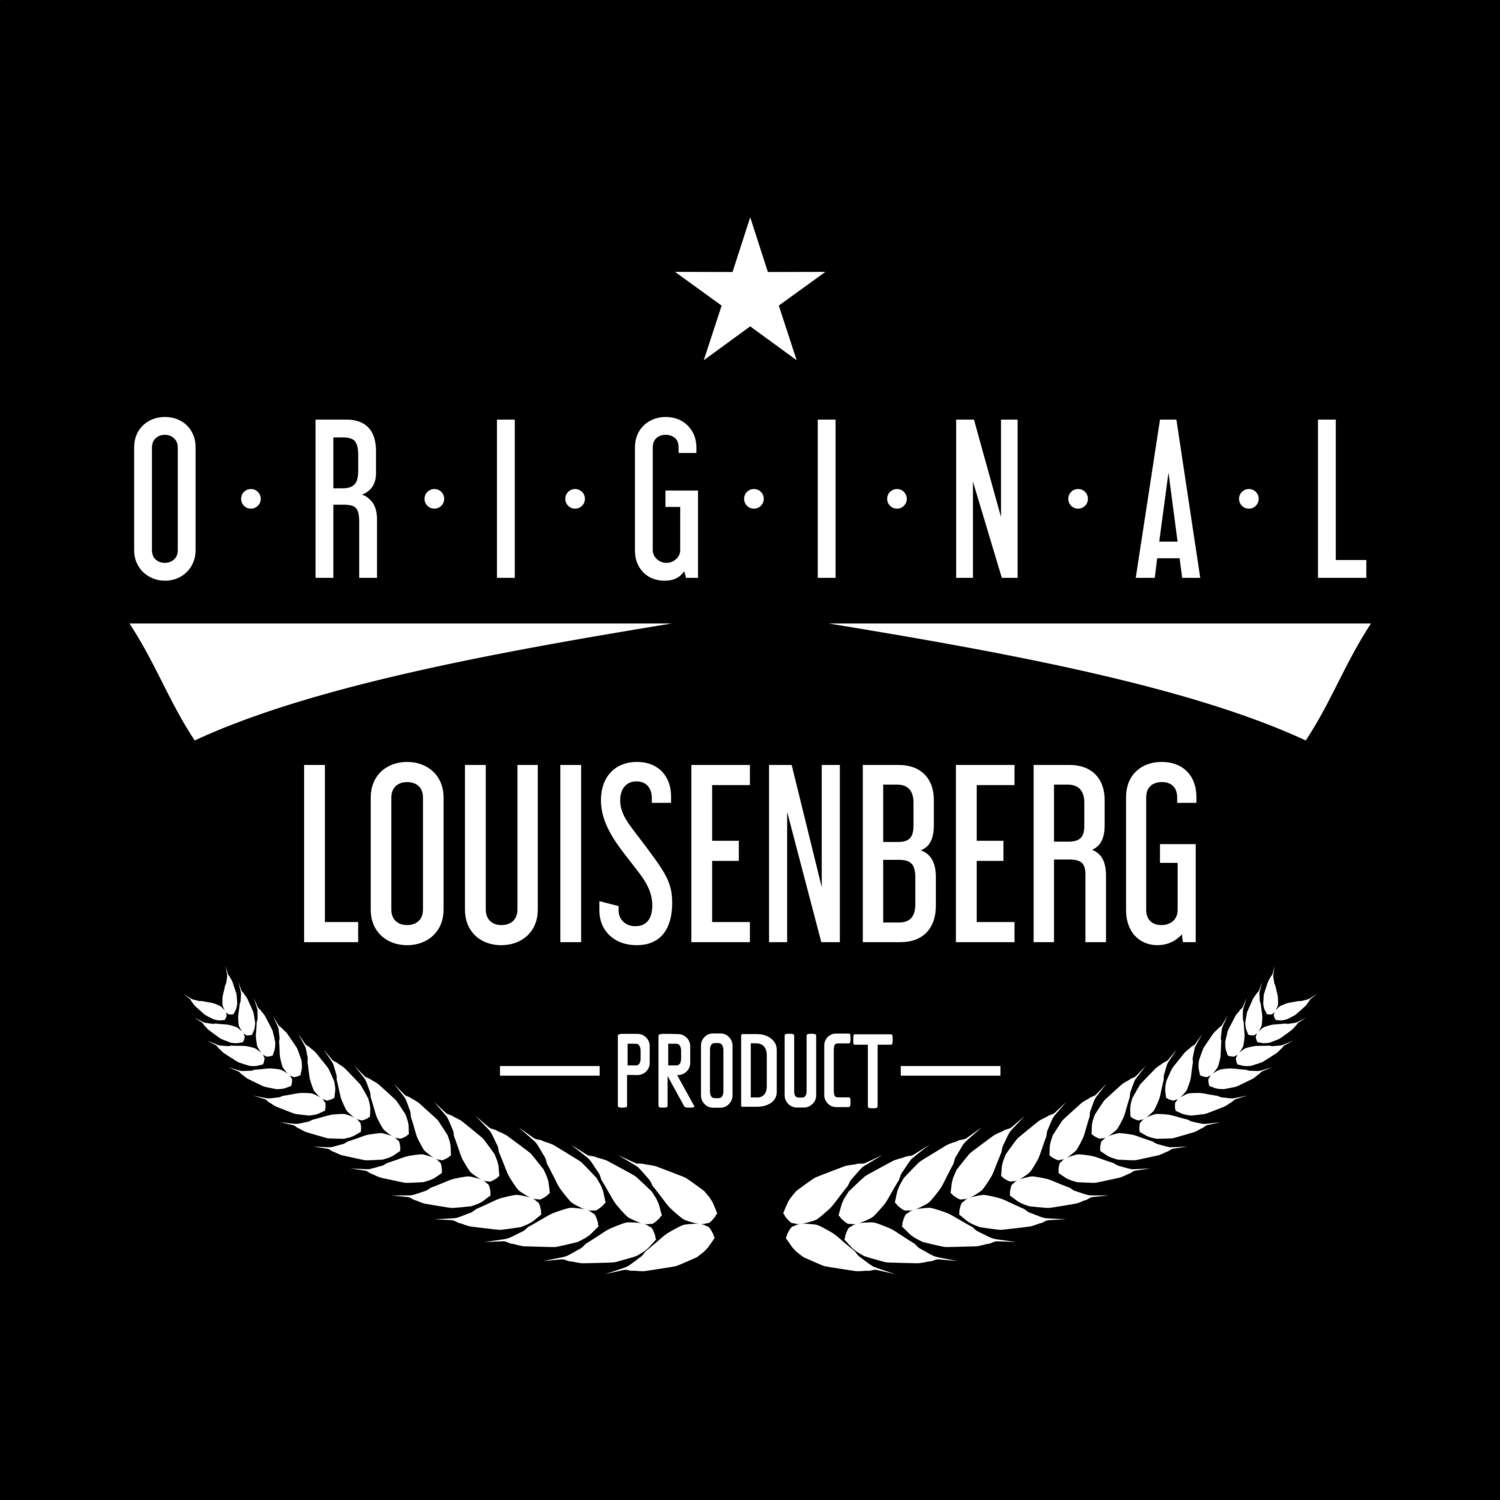 Louisenberg T-Shirt »Original Product«